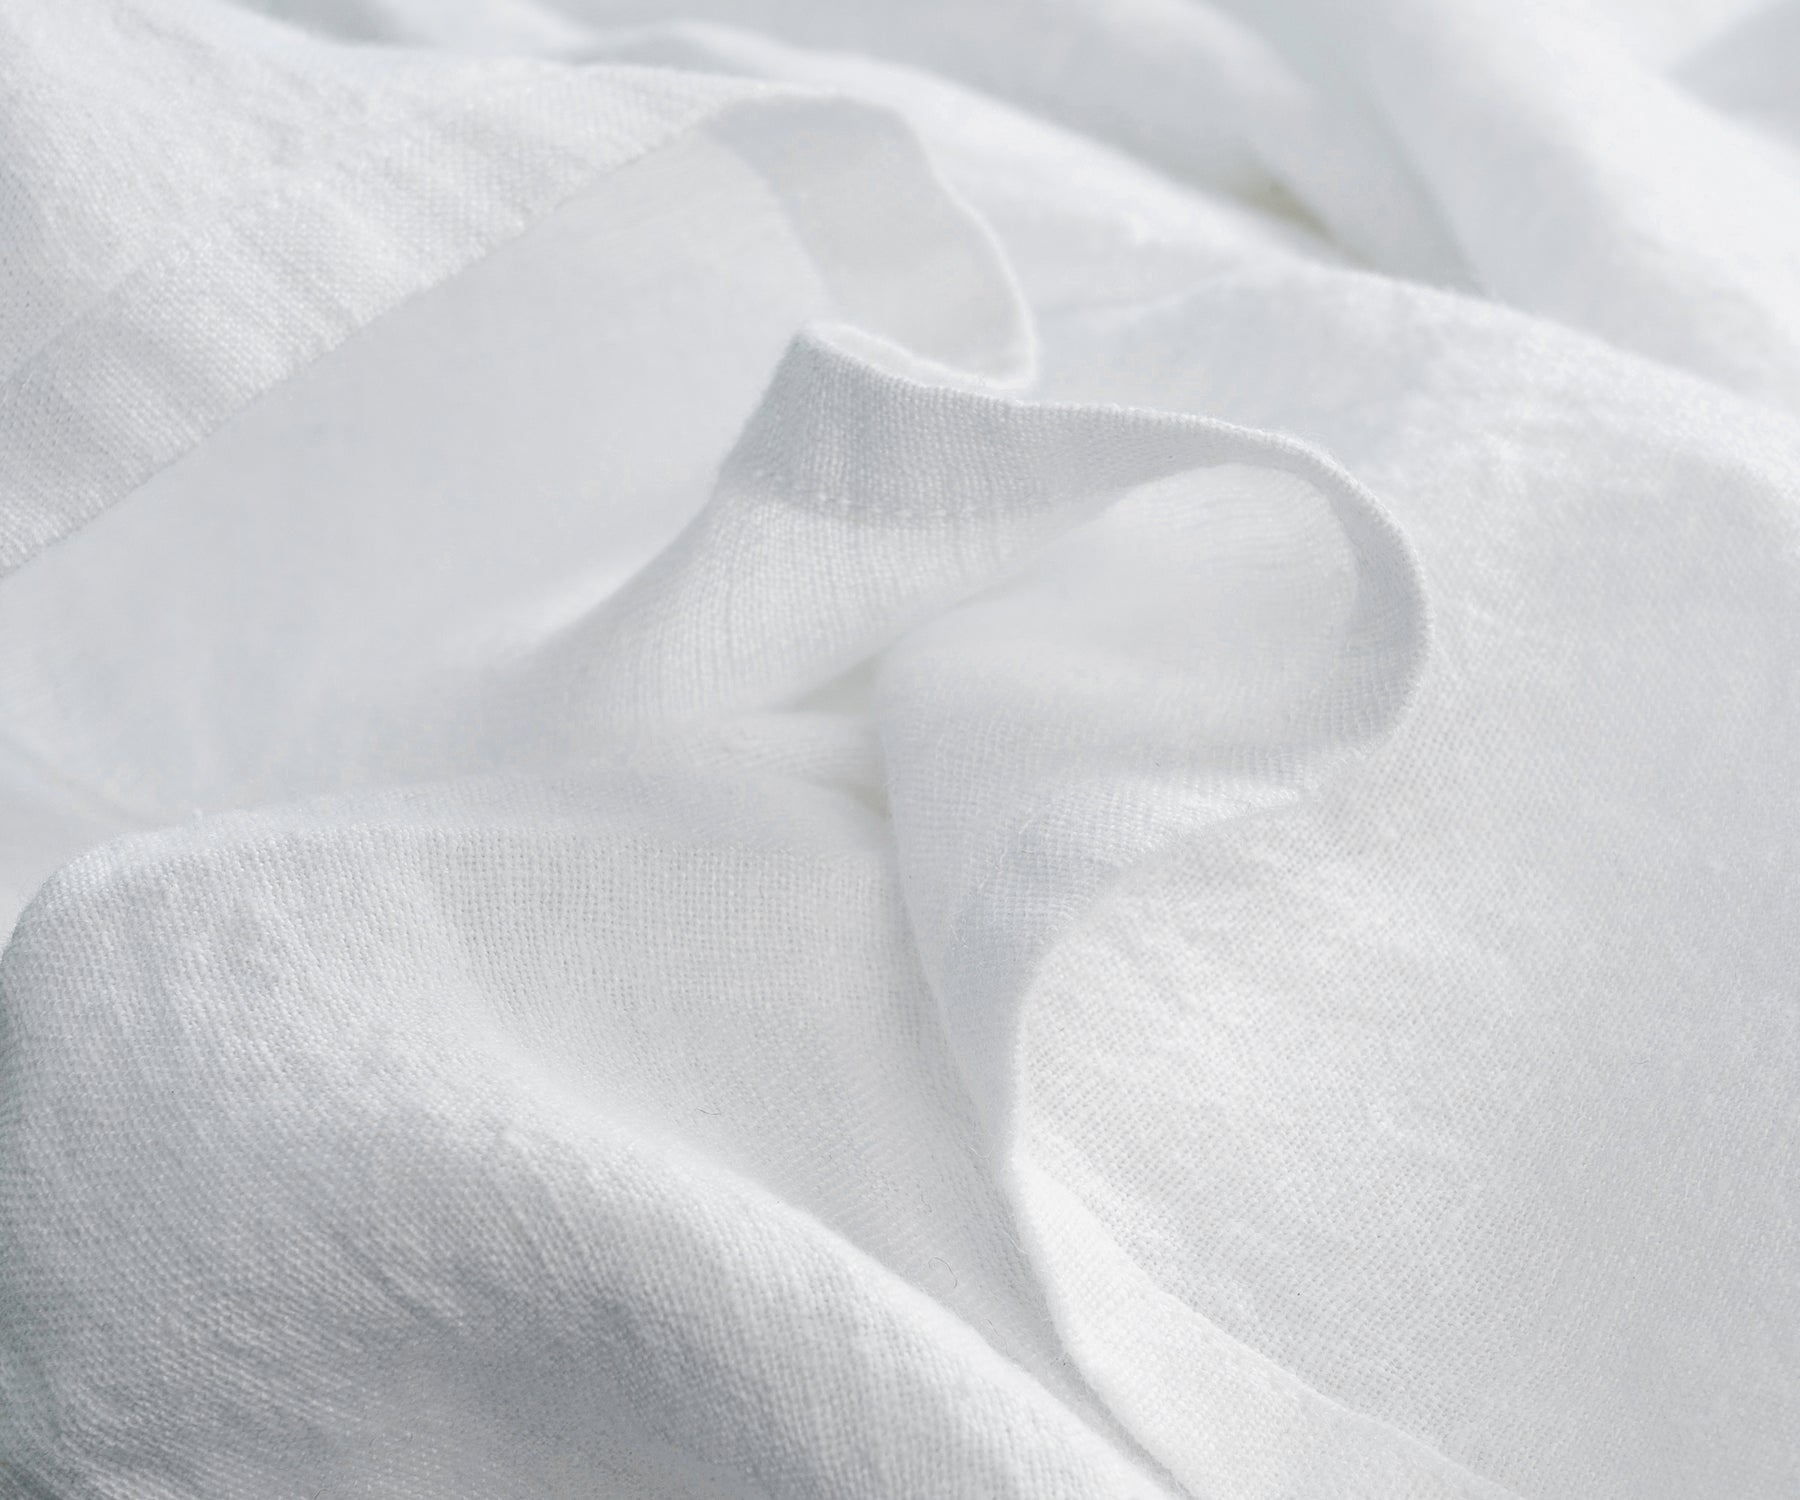 Crisp white curtains bringing a refreshing vibe